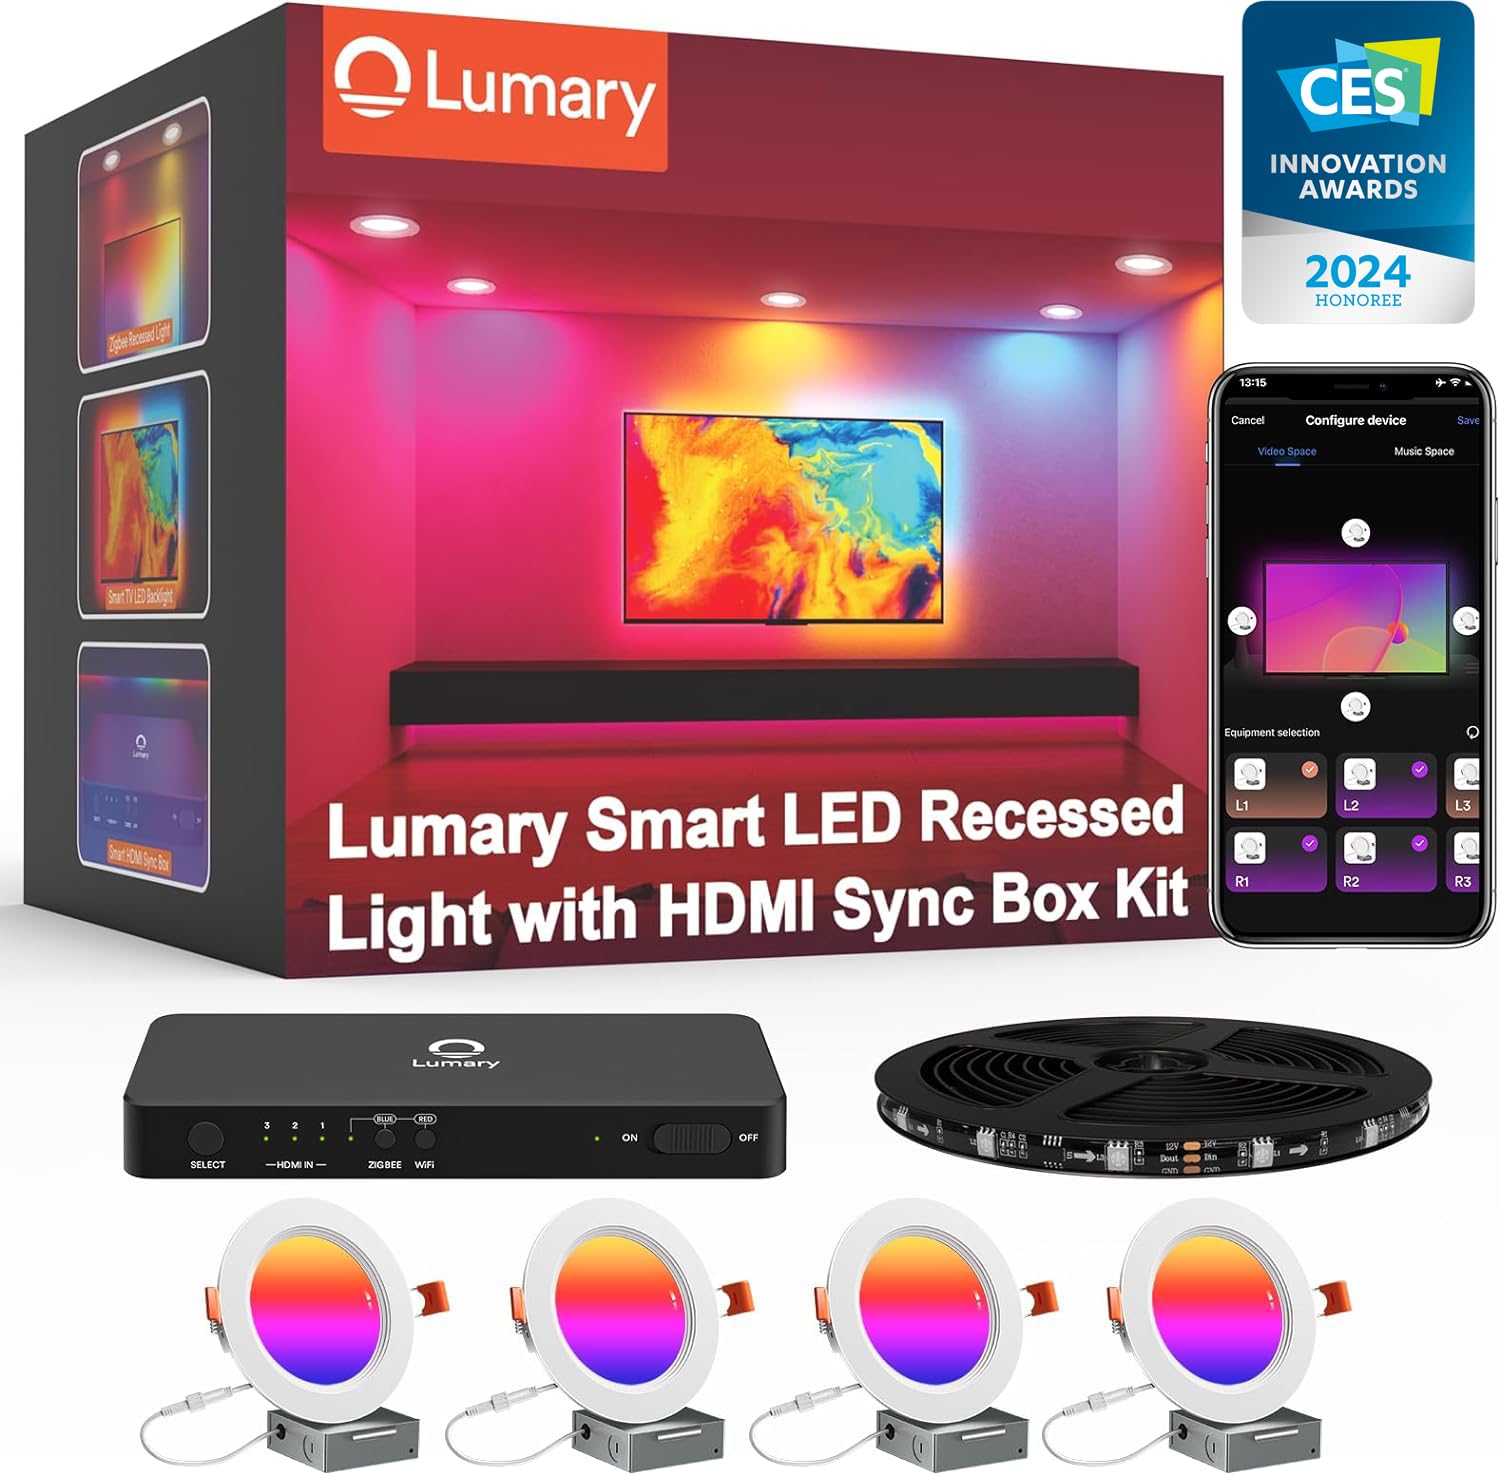 Lumary Zigbee Smart Lighting - Enhance Your Viewing Experience